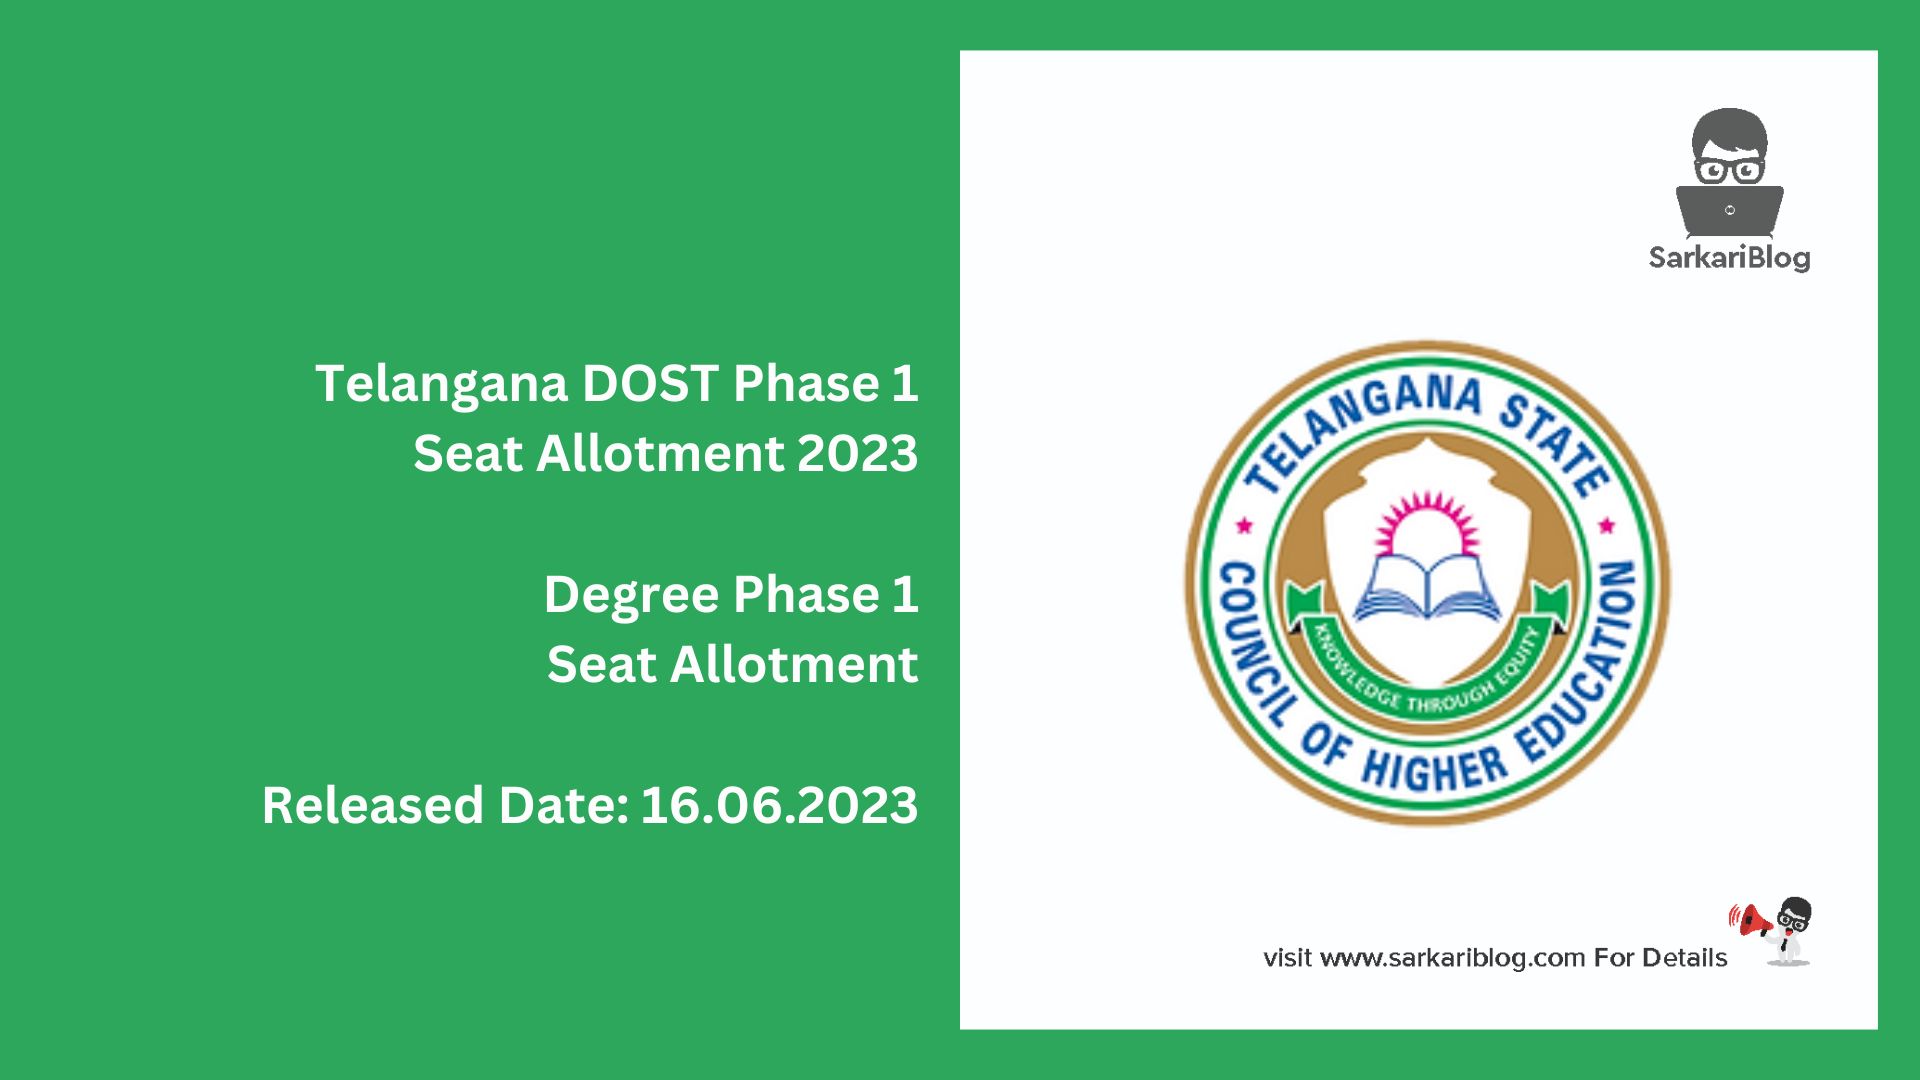 Telangana DOST Phase 1 Seat Allotment 2023